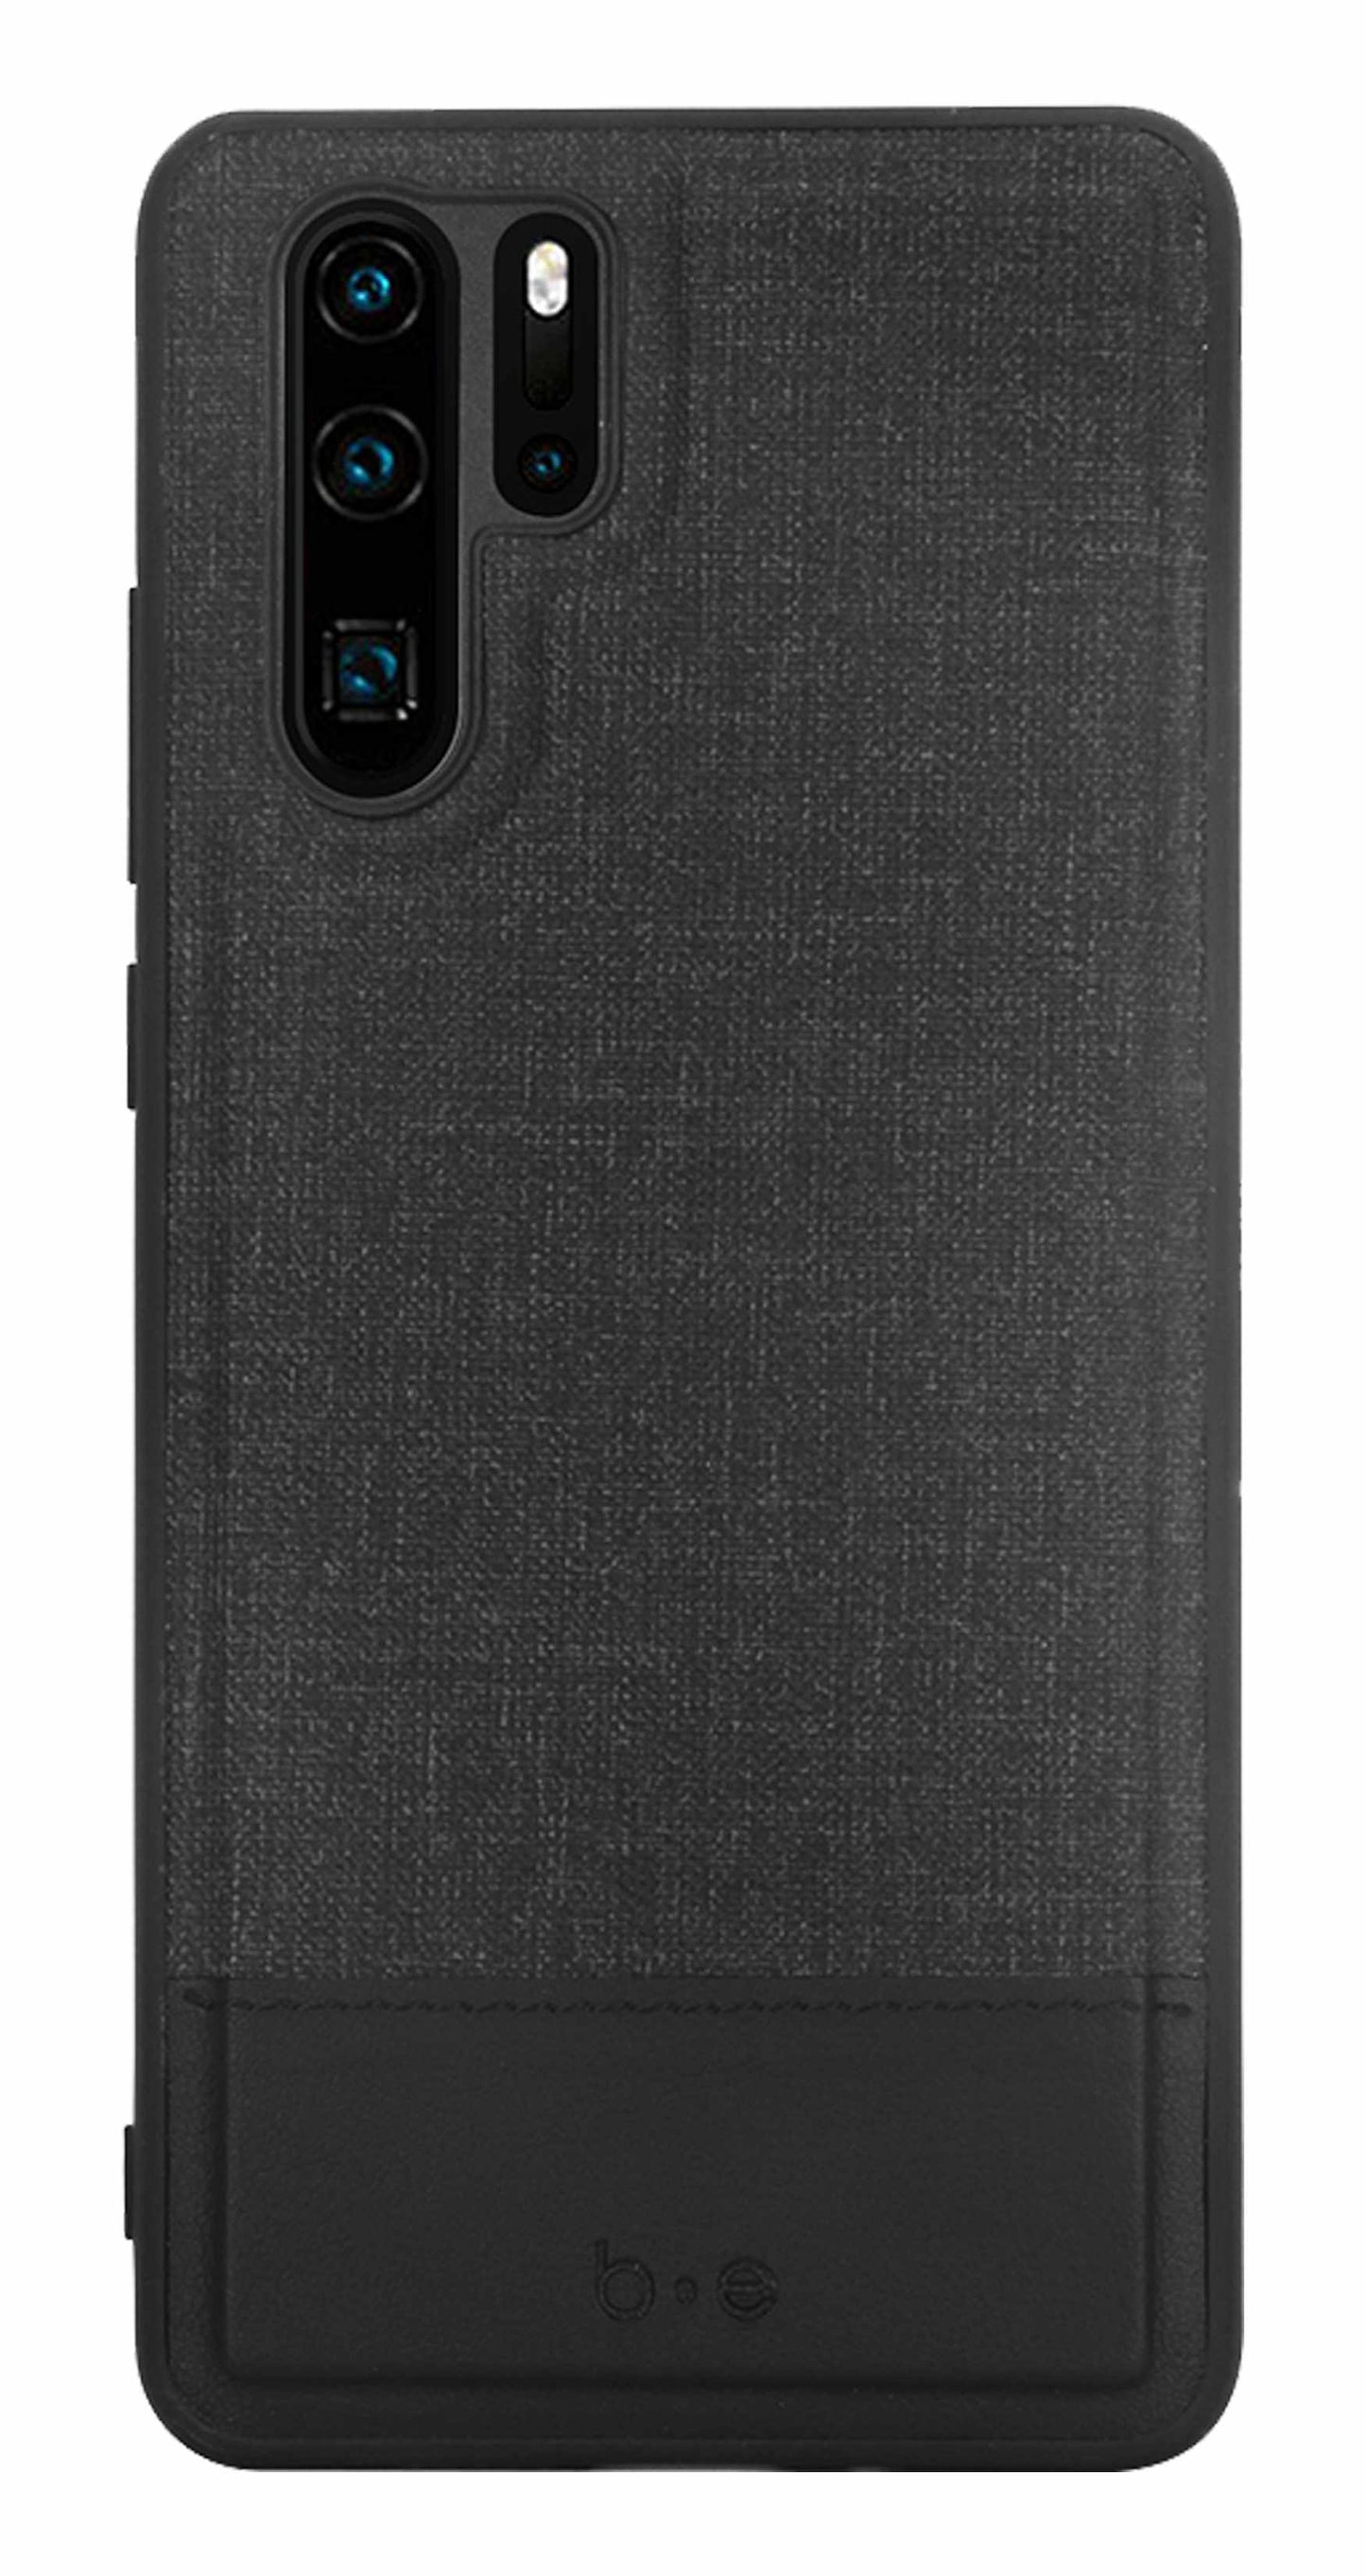 2 in 1 Folio Case Black/Black for Huawei P30 Pro